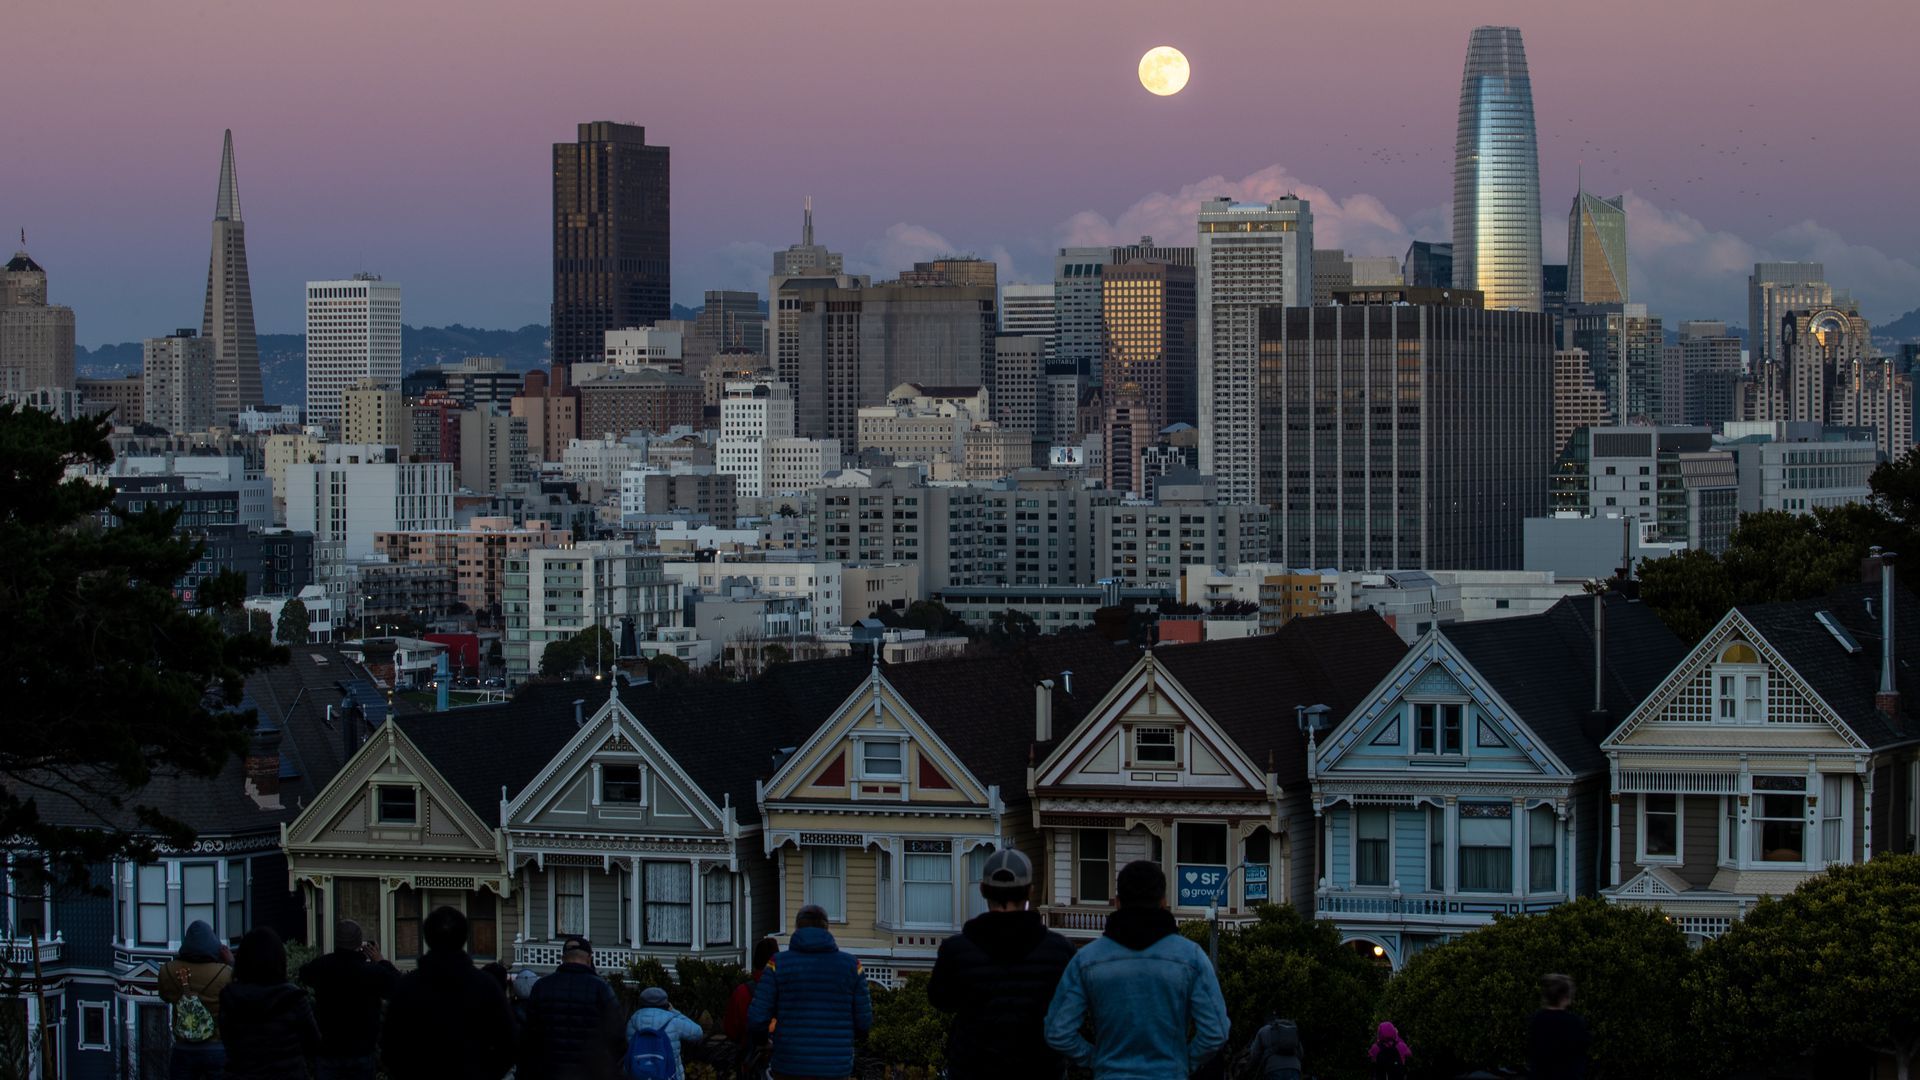 San Francisco. Photo by Tayfun Coskun/Anadolu Agency via Getty Images